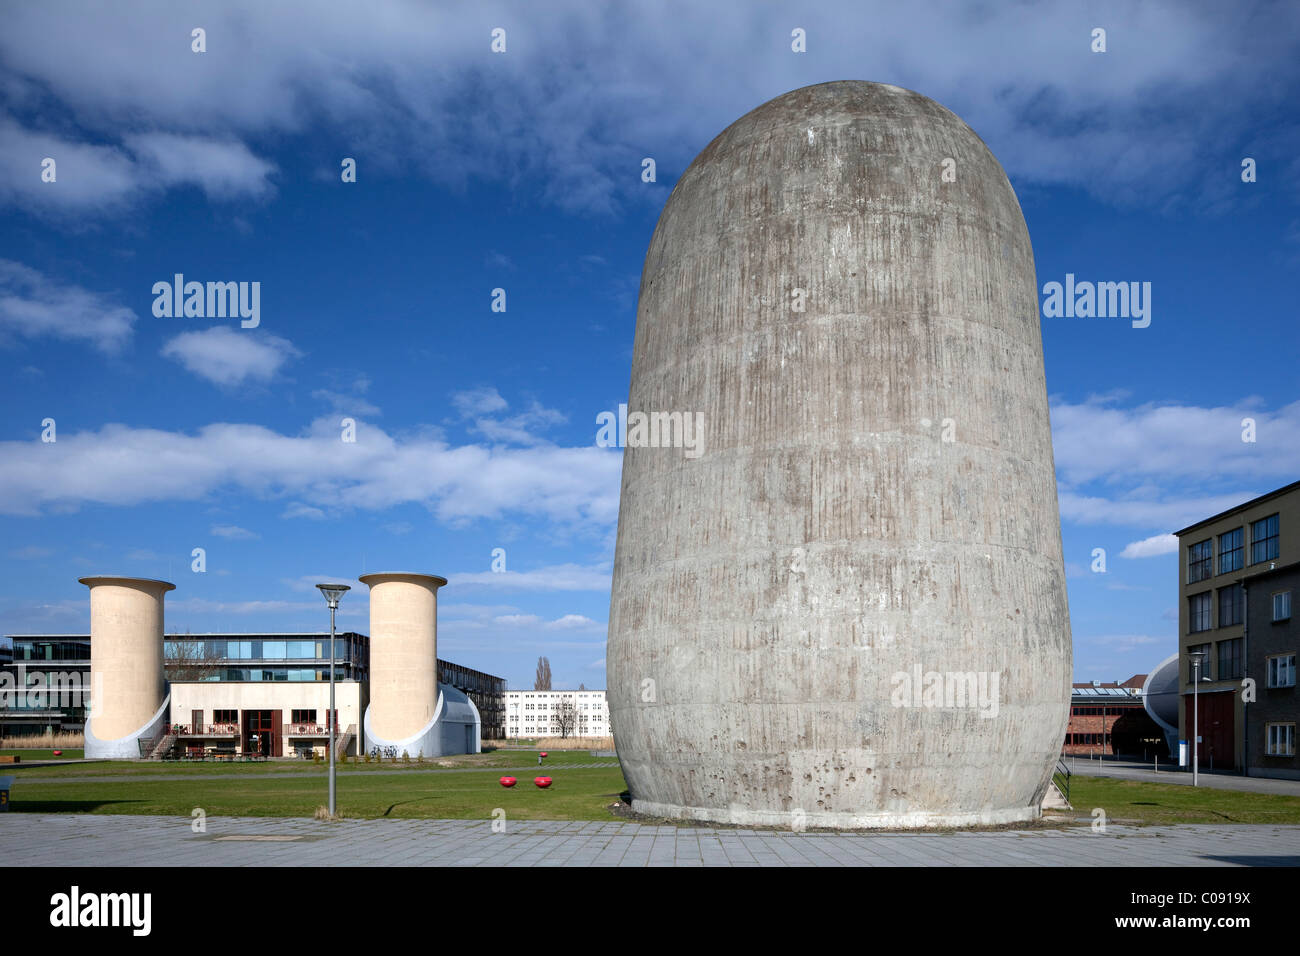 Soufflerie verticale, monument technique, ancien aéroport de Treptow, Wissenschaftsstadt Science City, Berlin Adlershof Banque D'Images